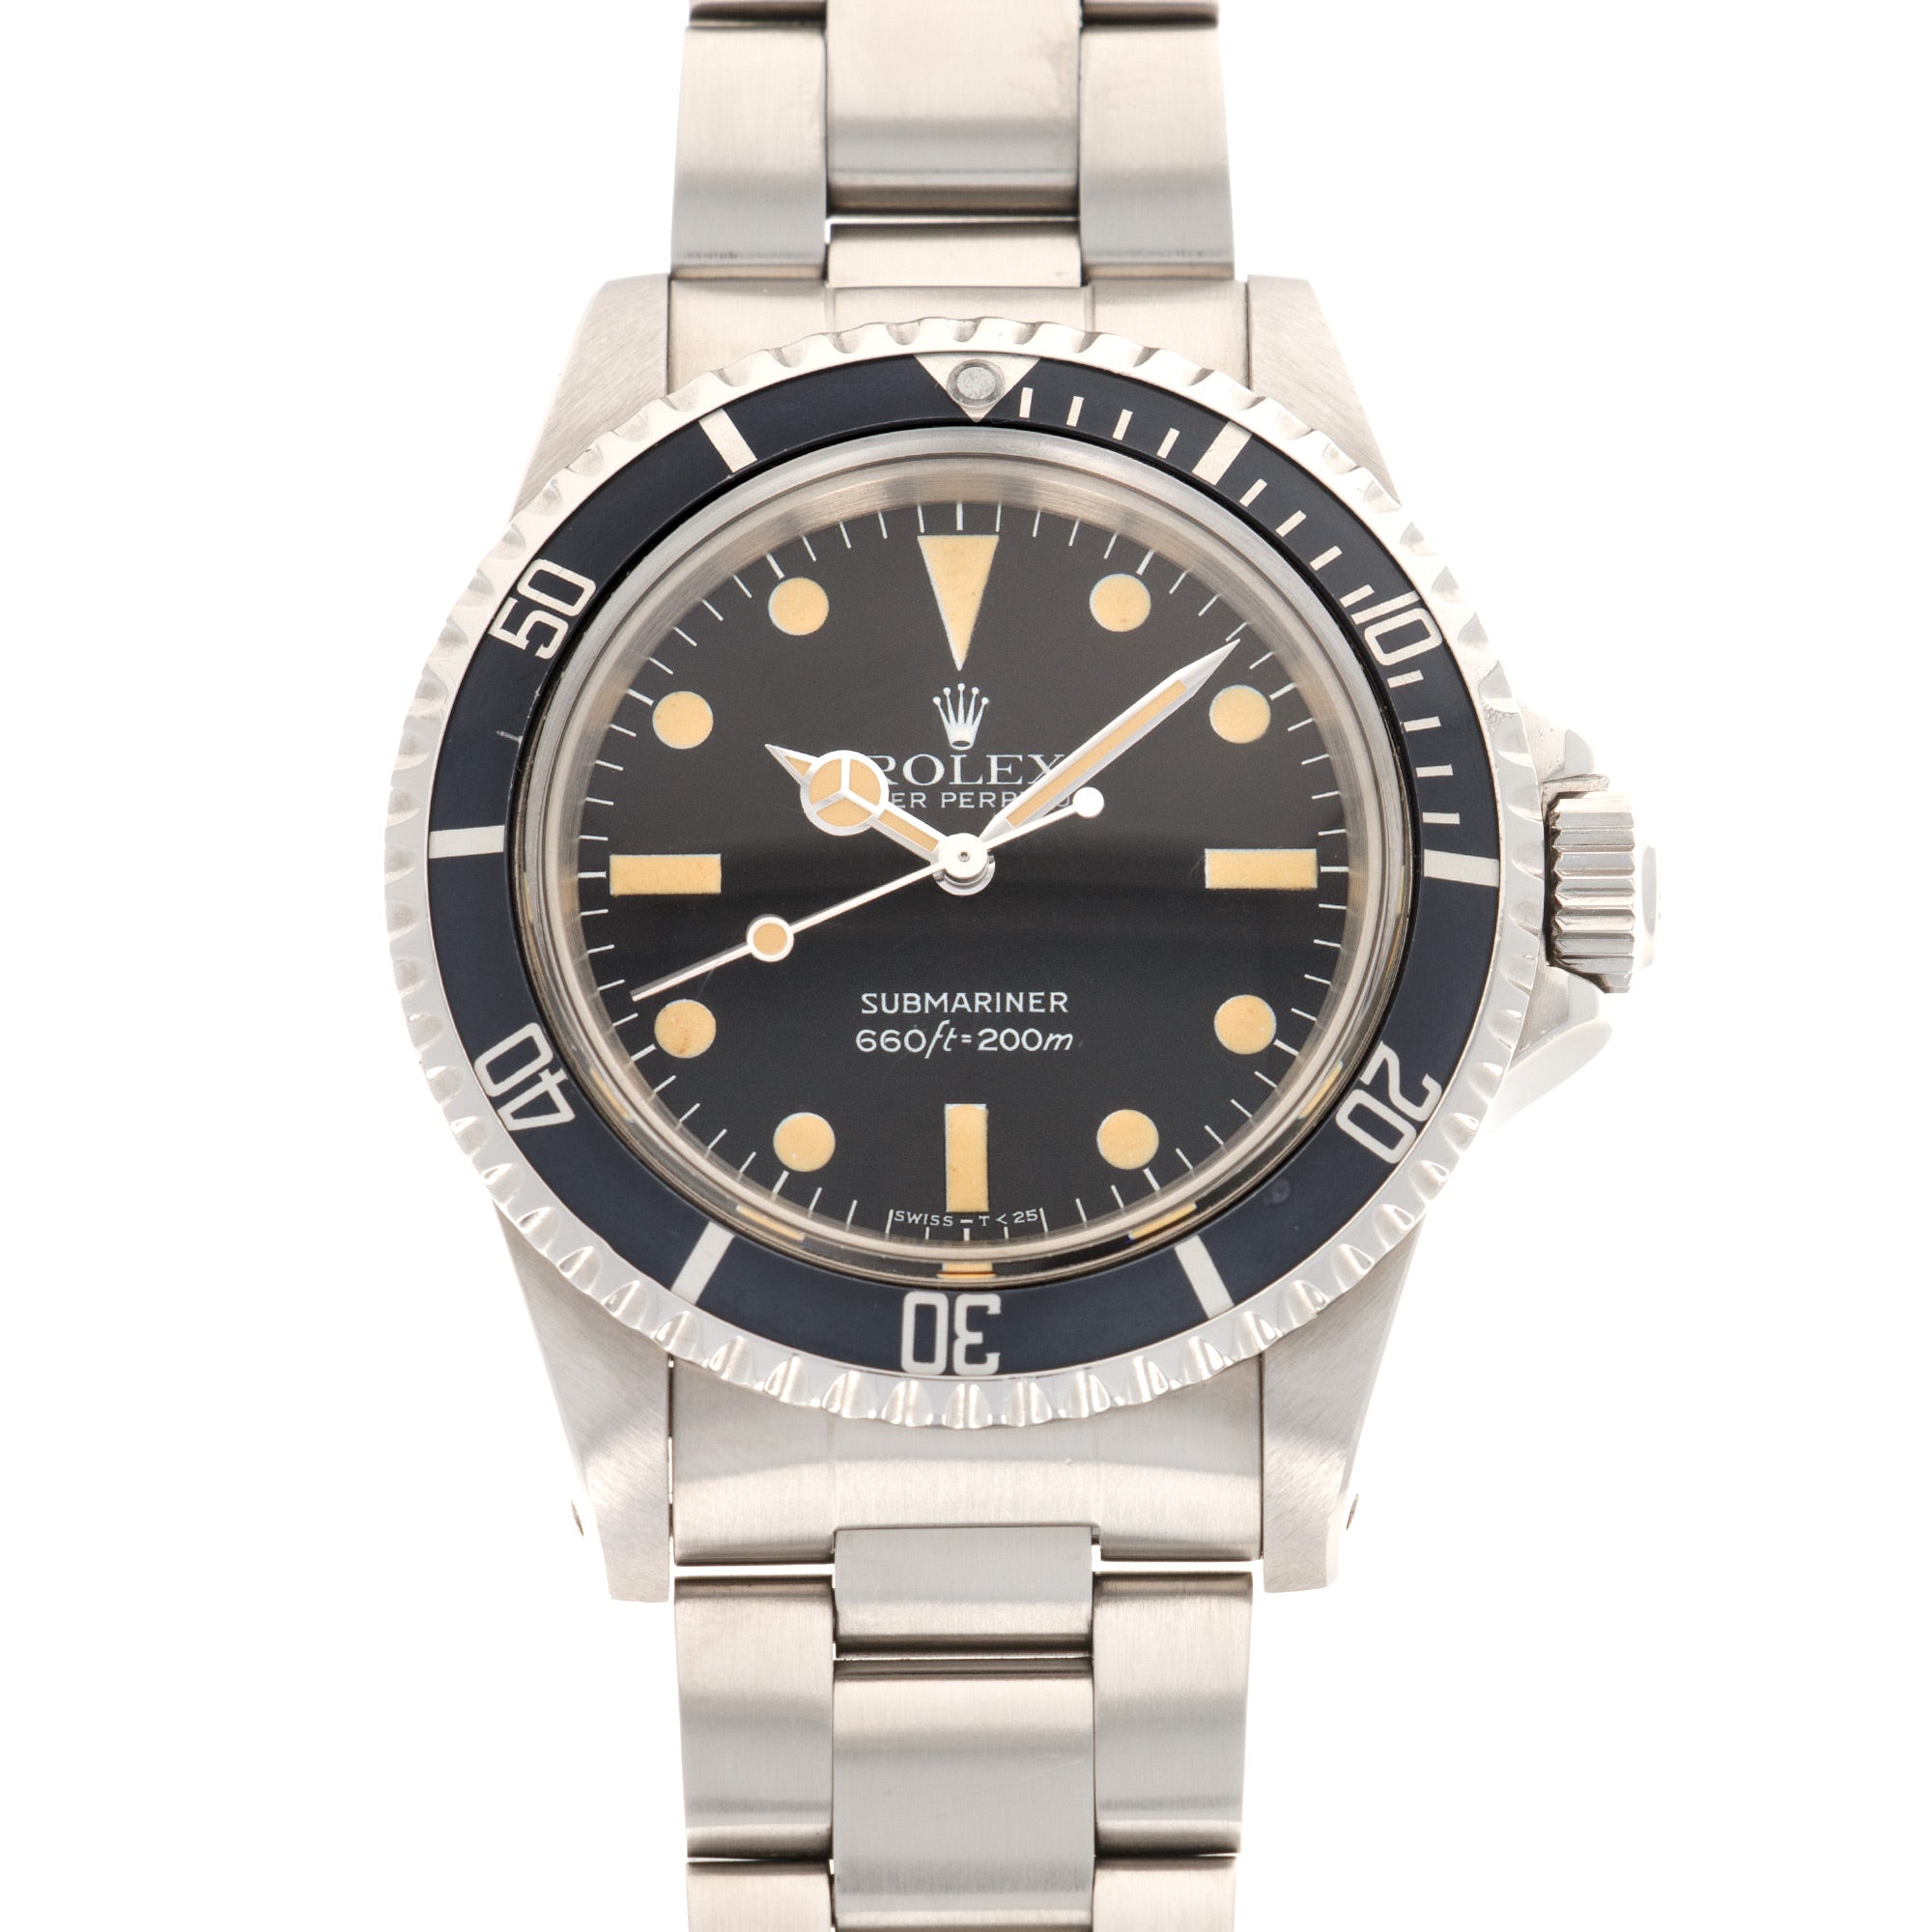 Rolex - Rolex Submariner Maxi Dial Watch Ref. 5513 - The Keystone Watches